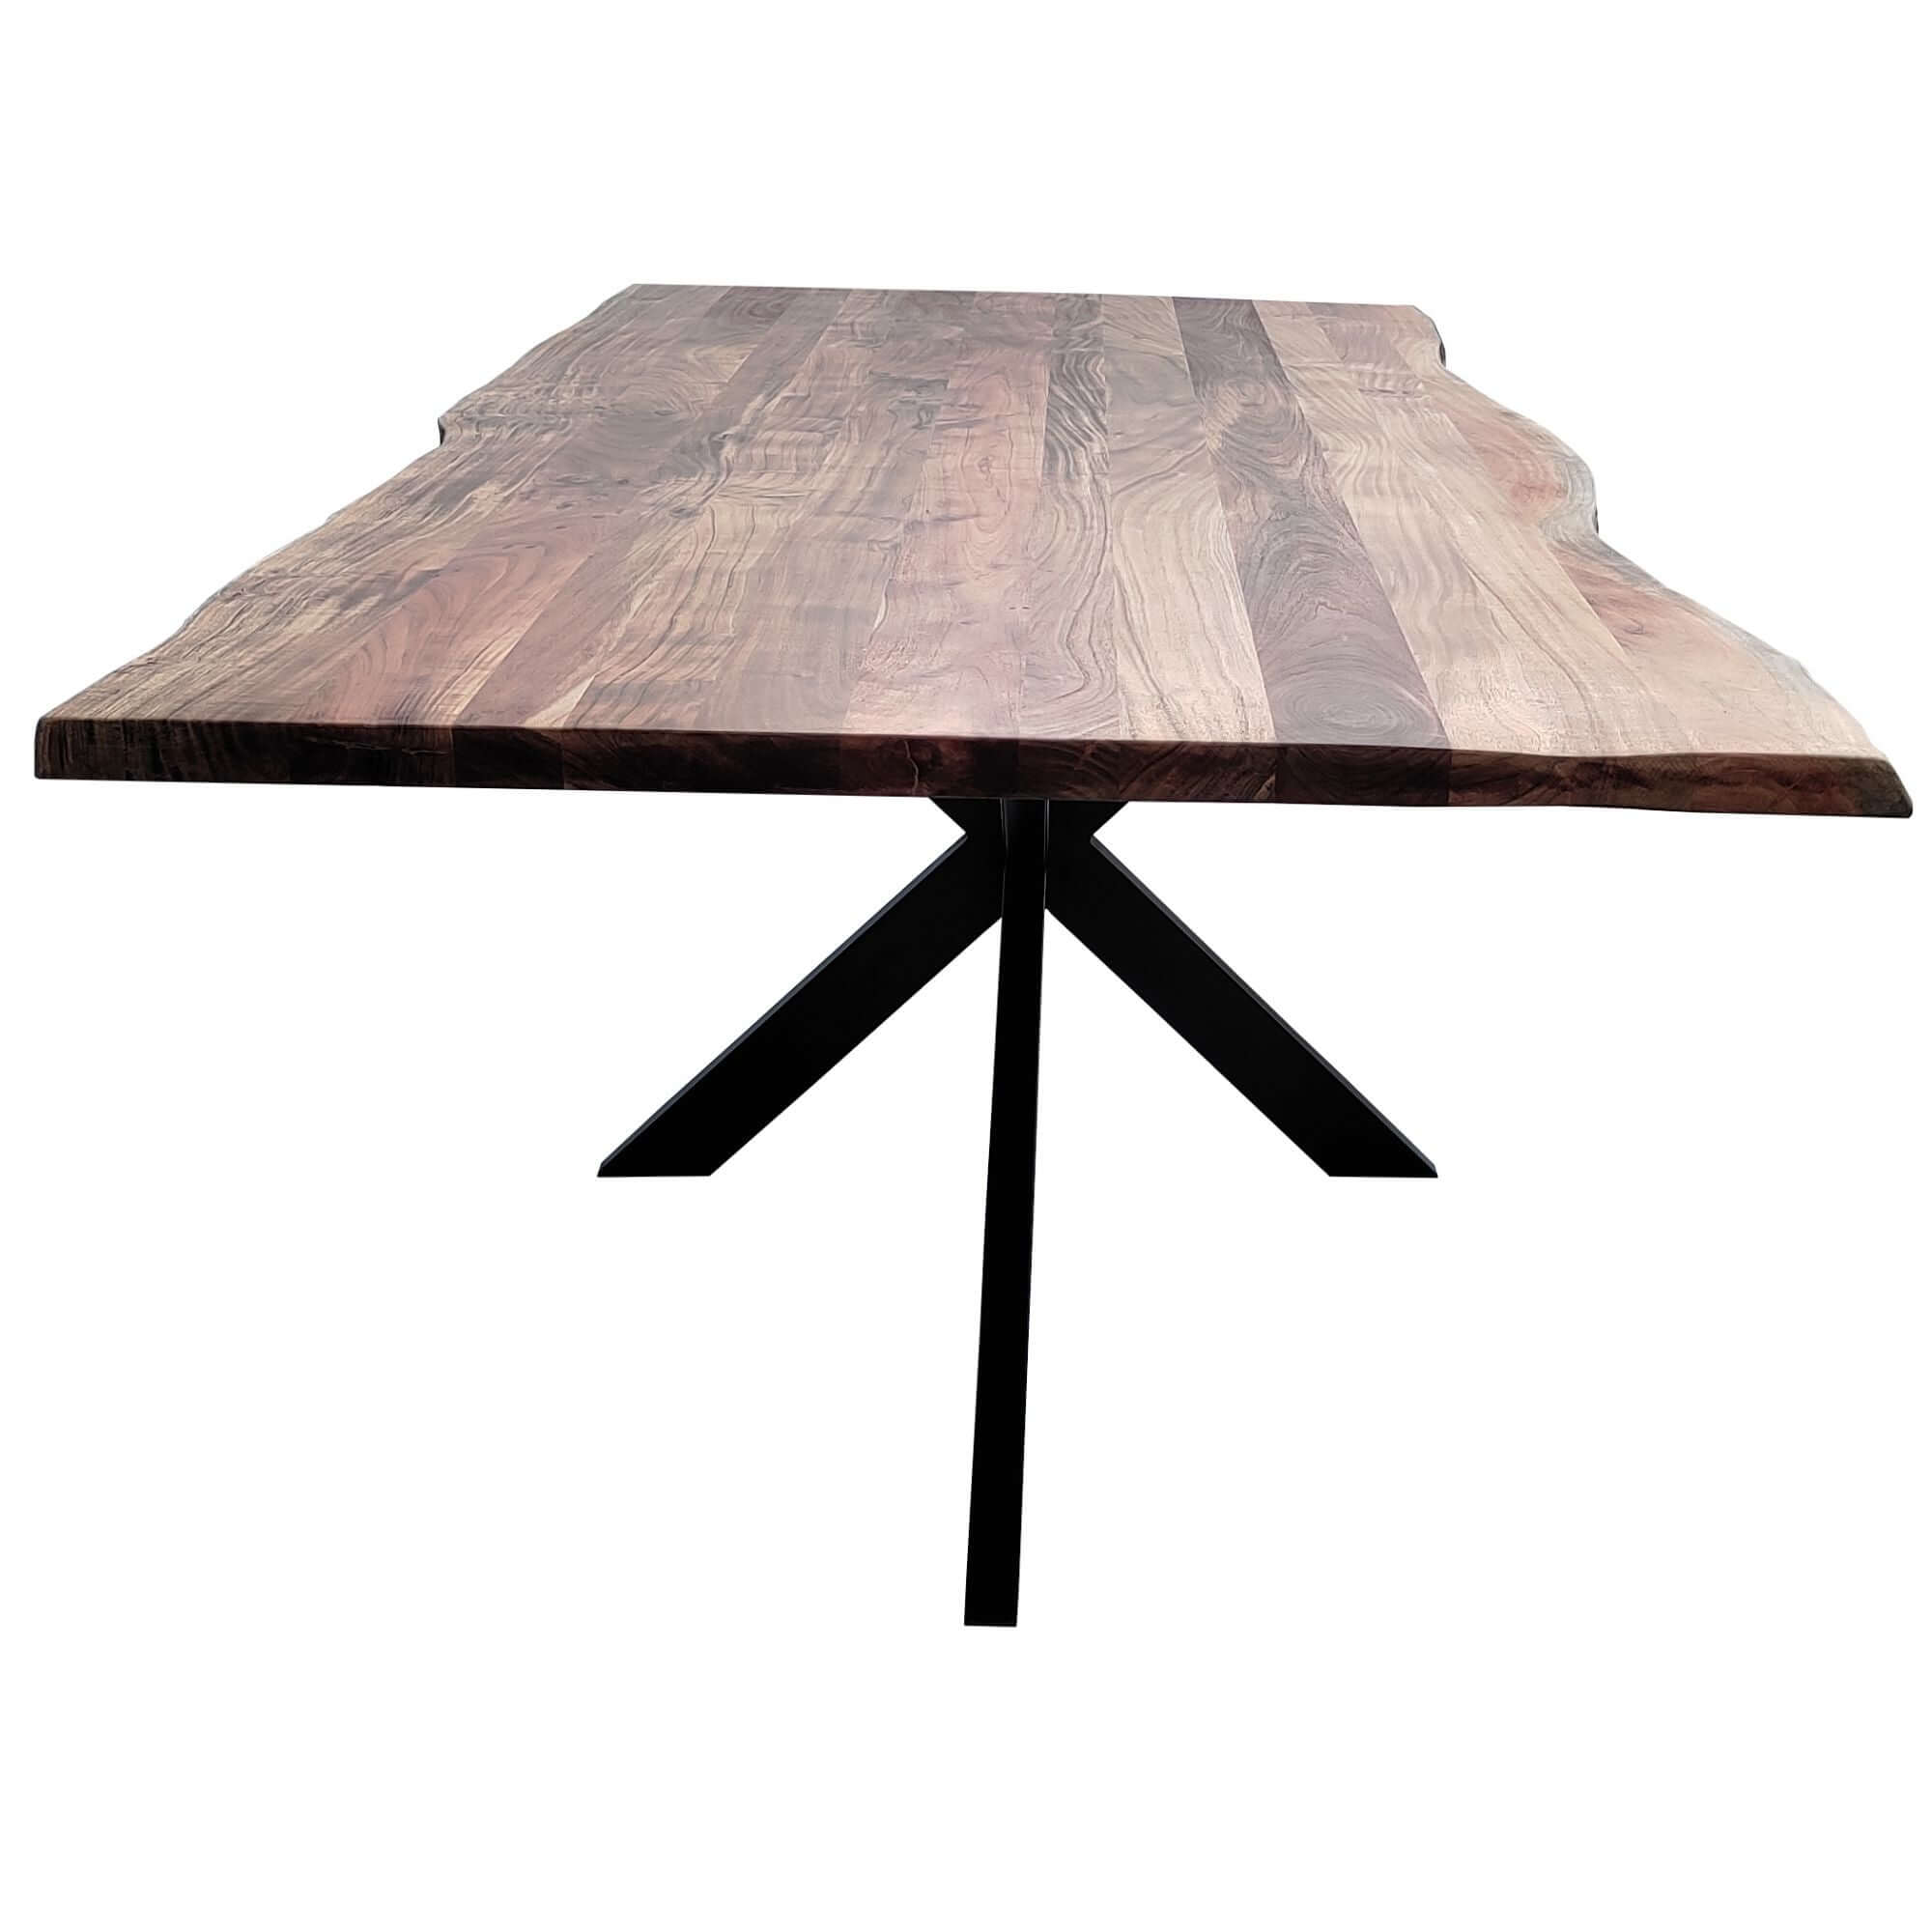 Lantana Dining Table 210cm Live Edge Solid Acacia Timber Wood Metal Leg -Natural-Upinteriors